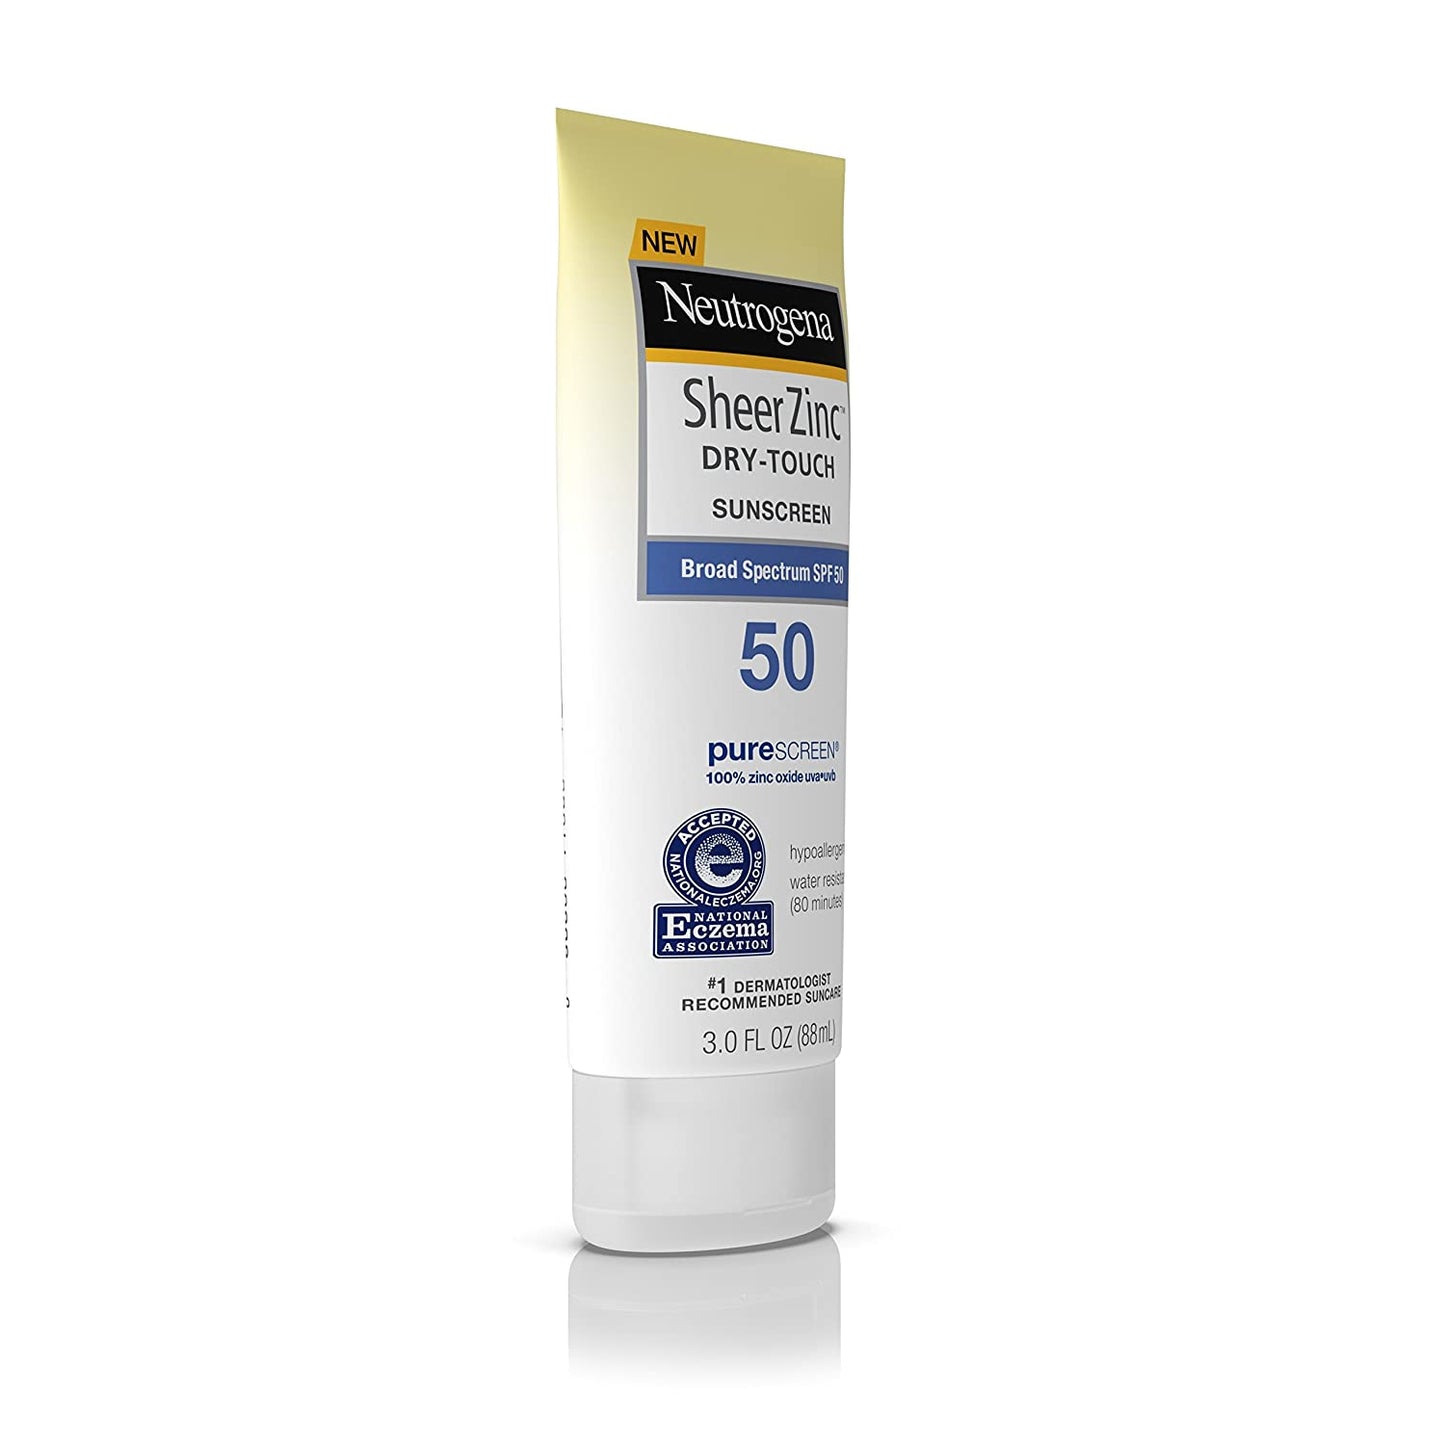 Neutrogena Sheer Zinc Dry-Touch SPF 50 Sunscreen, 3.0 fl.oz / 88ml